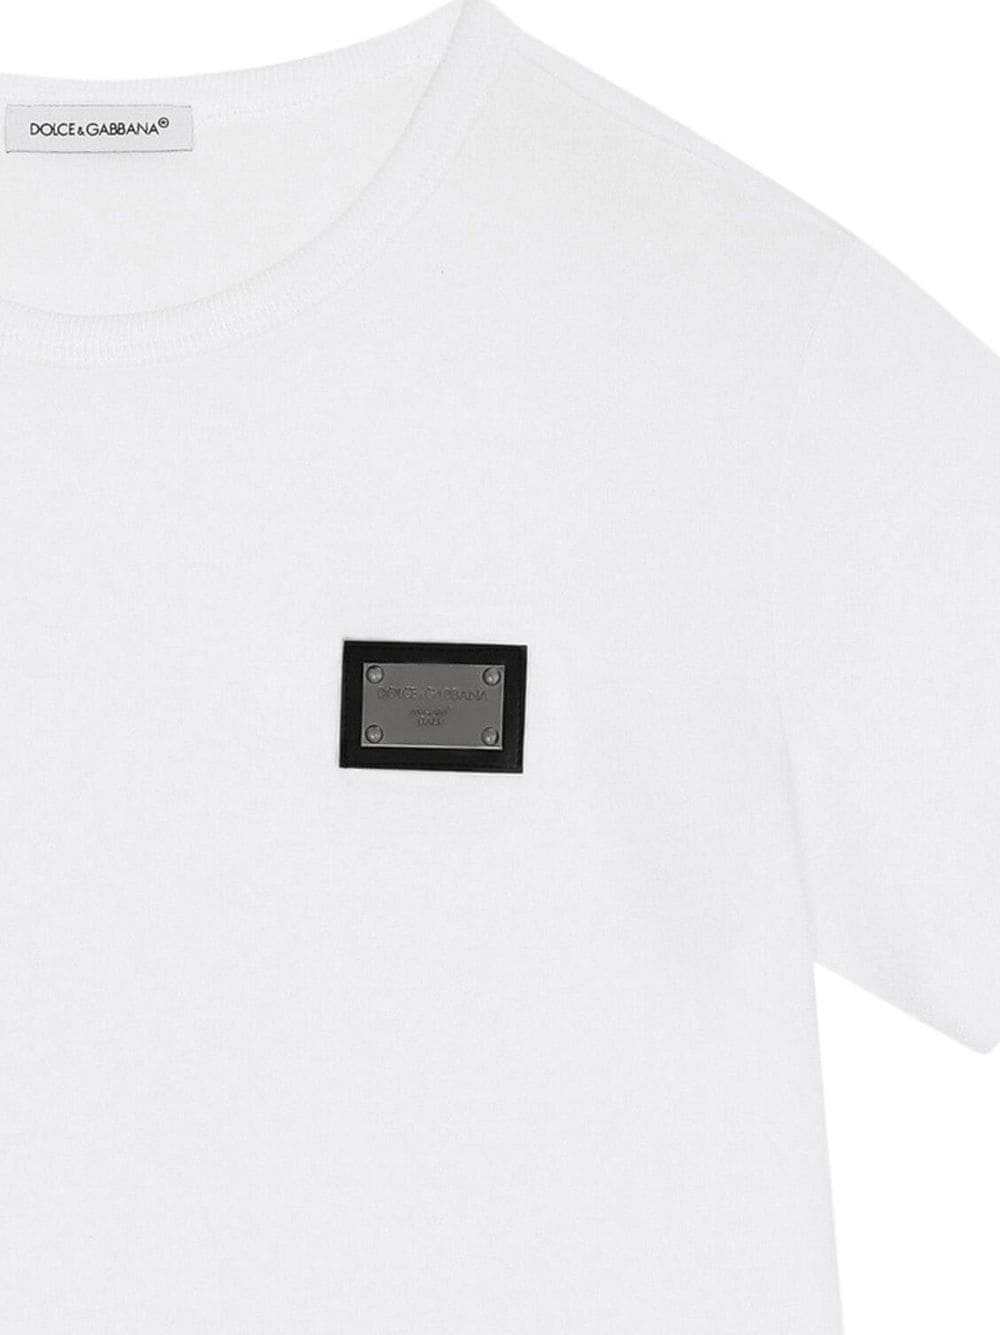 T-shirt unisex in cotone bianca con logo